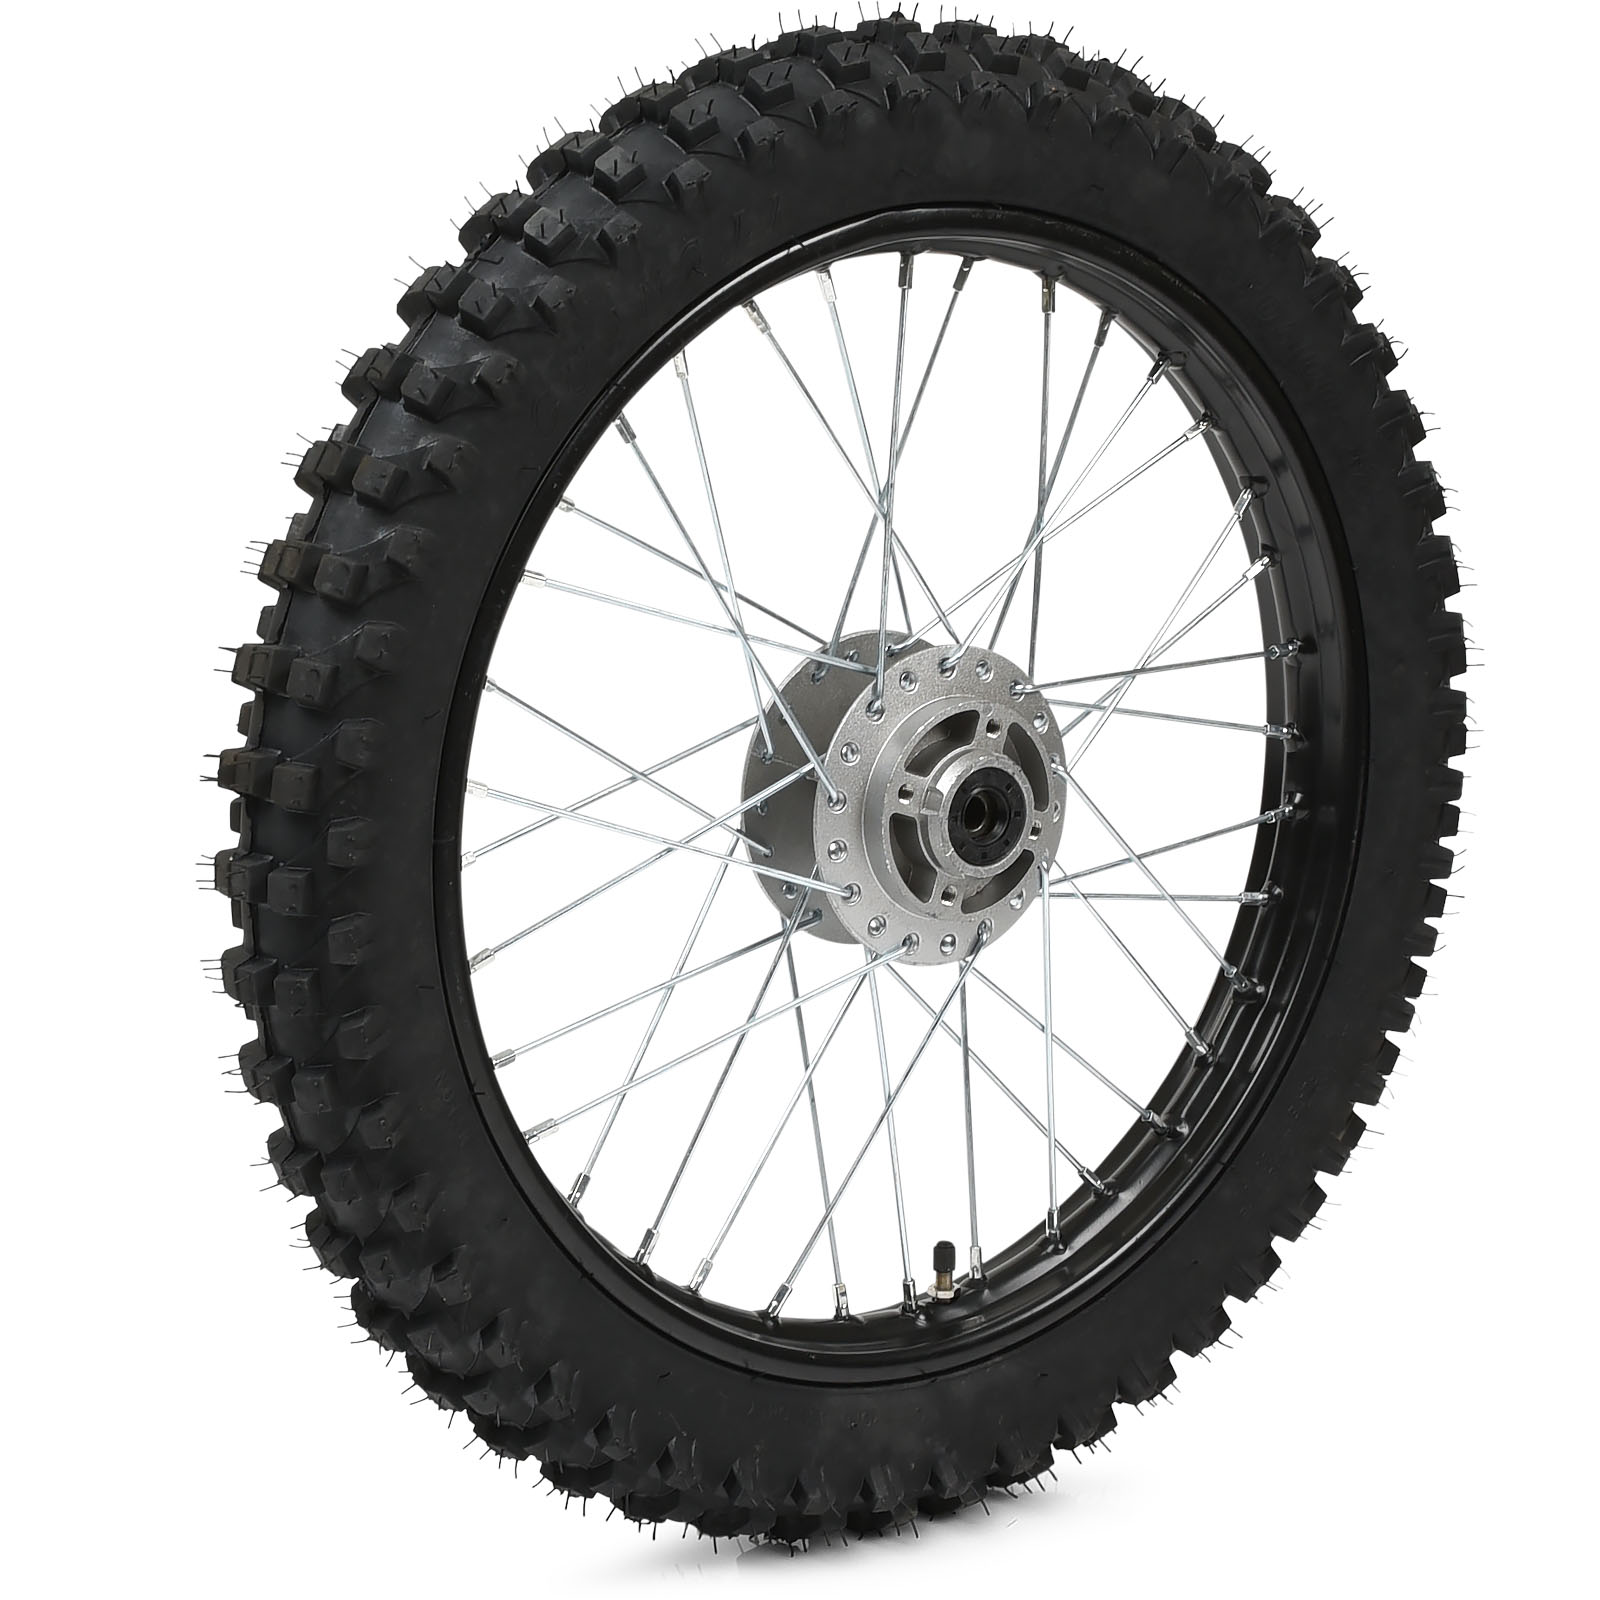 Framhjul, Dirt bike / Fiddy 70/100-17